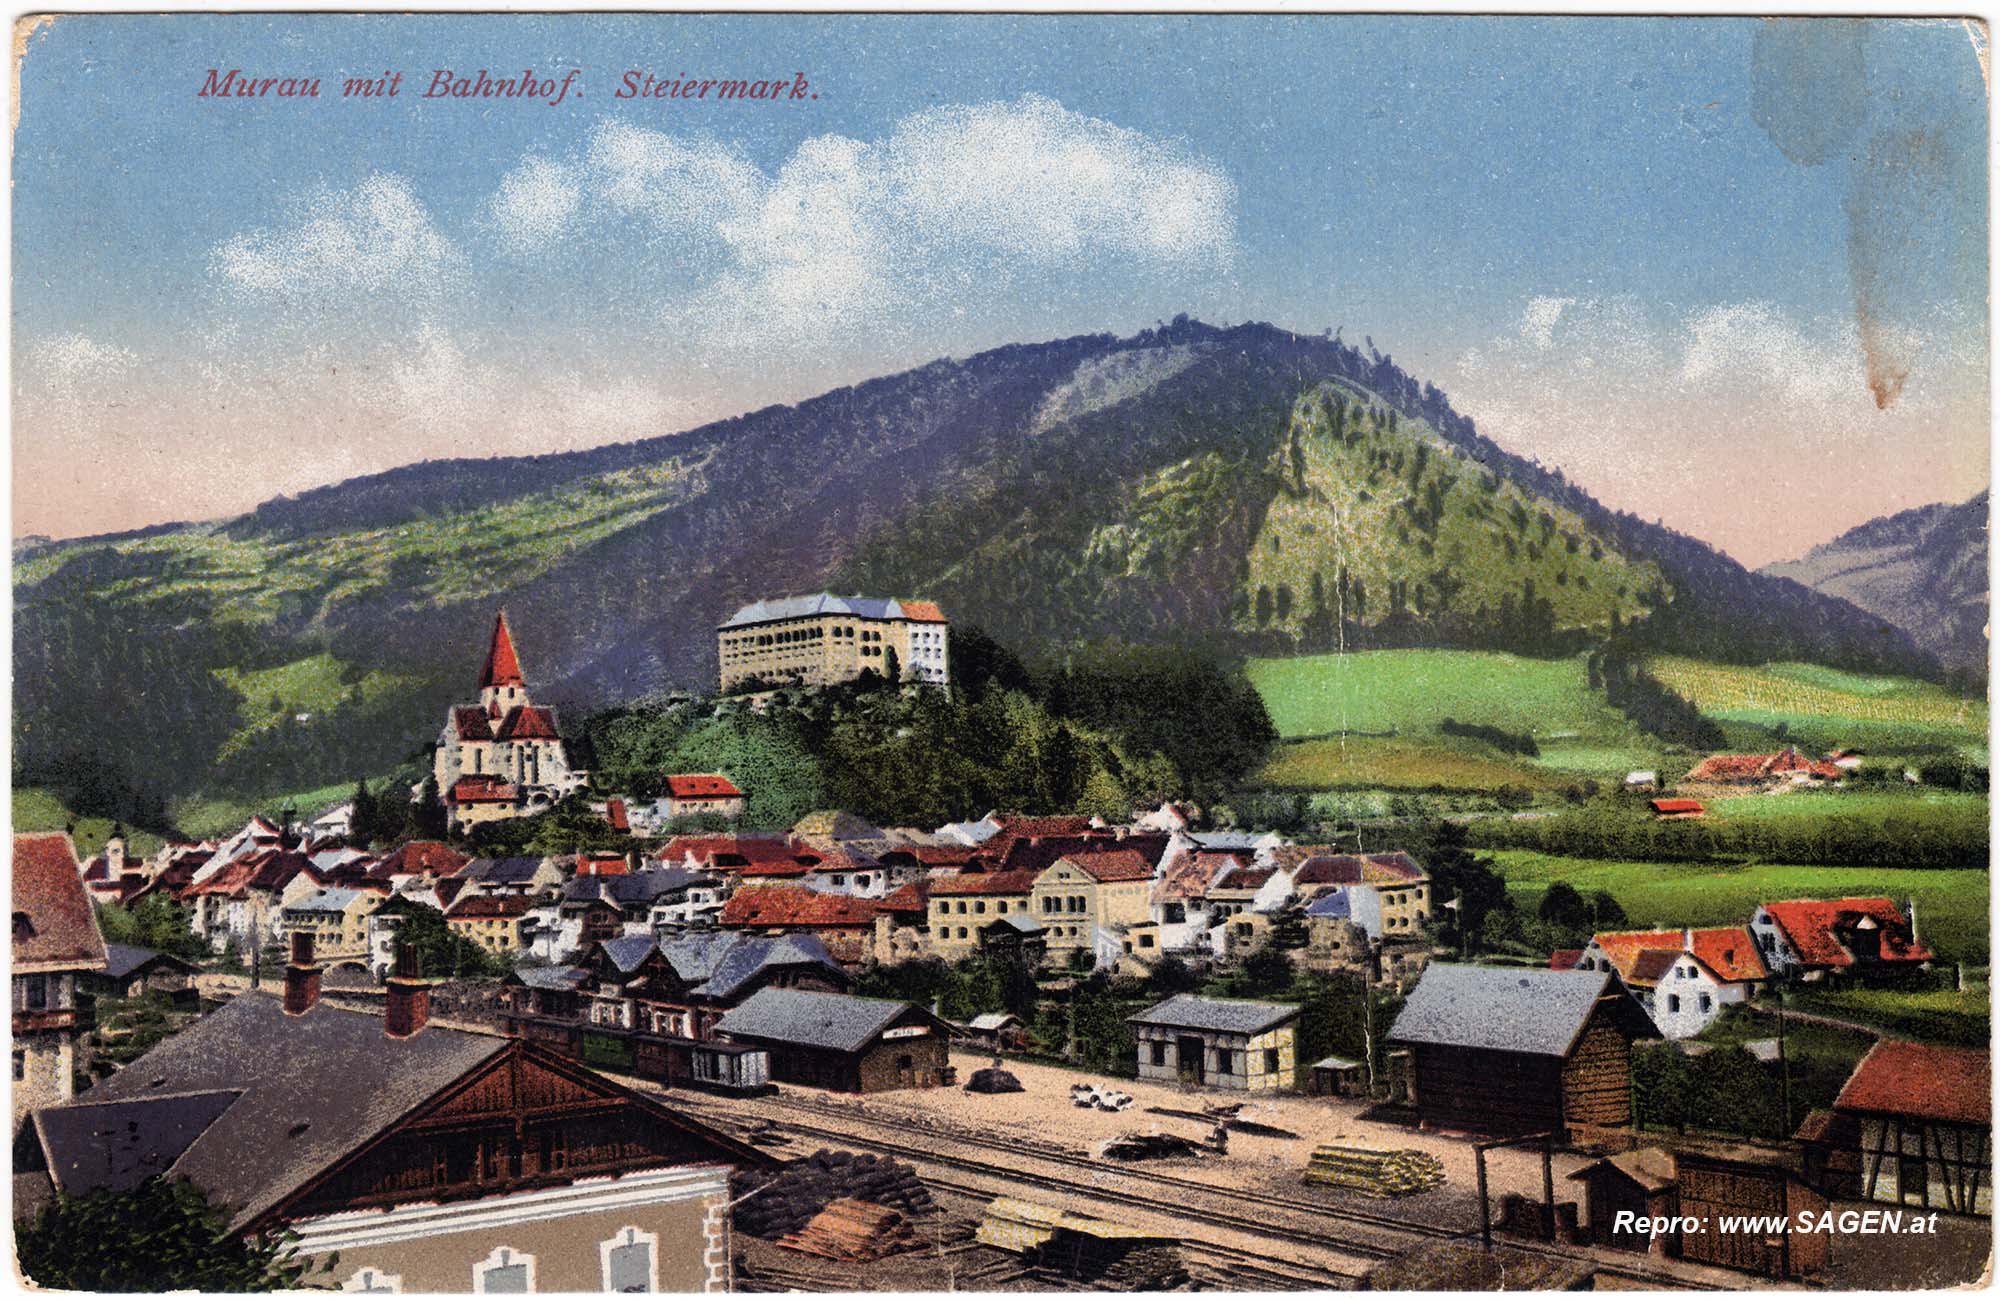 Murau mit Bahnhof. Steiermark